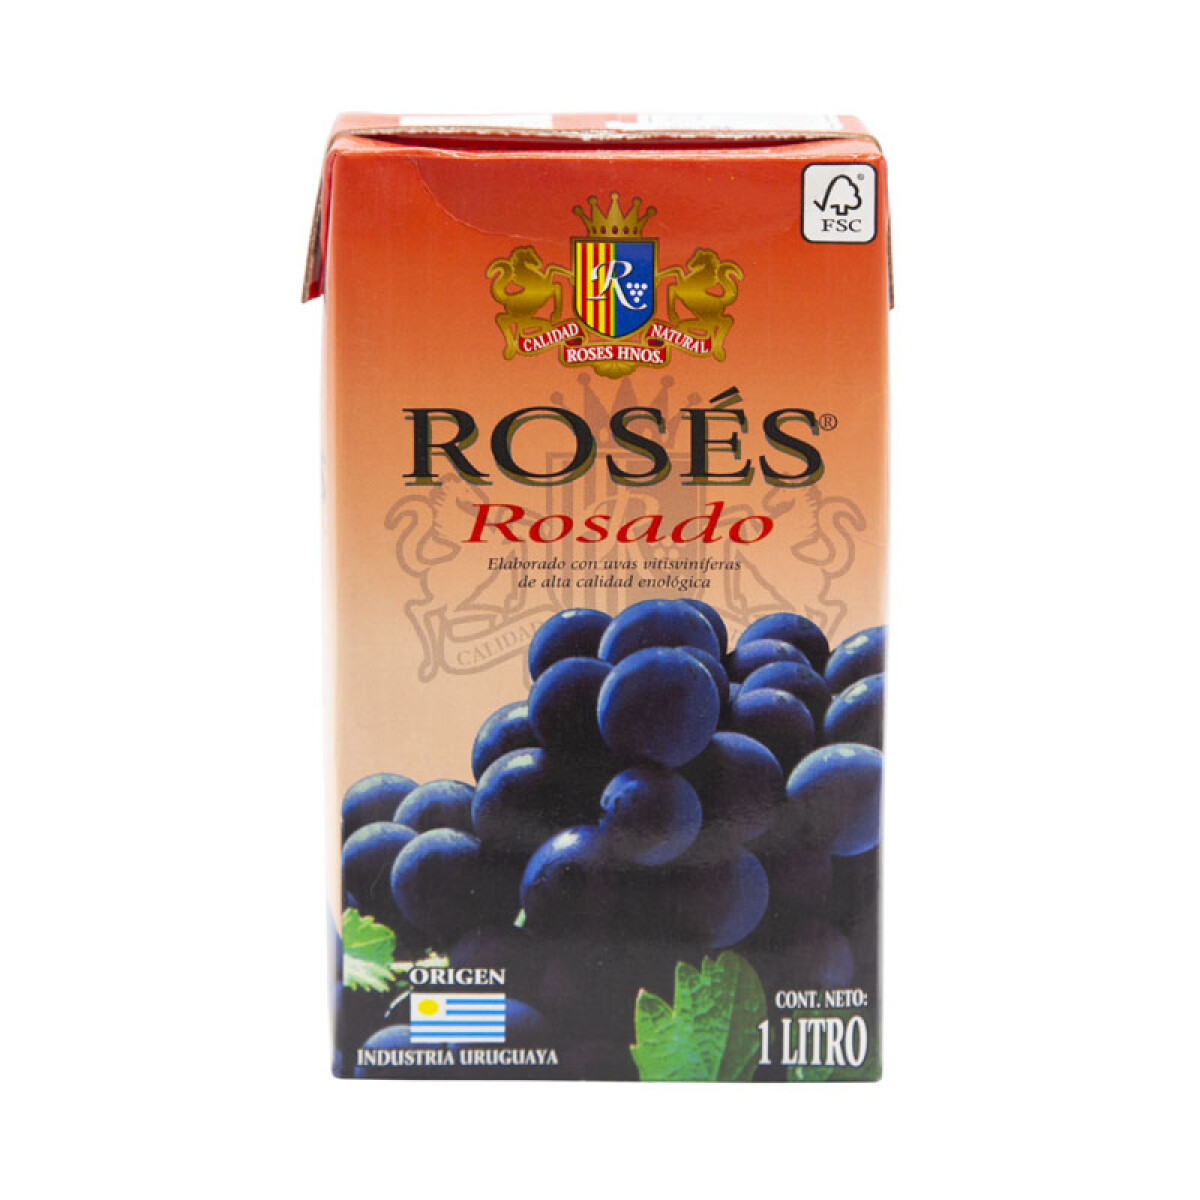 Vino ROSES 1L Tetra - Rosado suave 